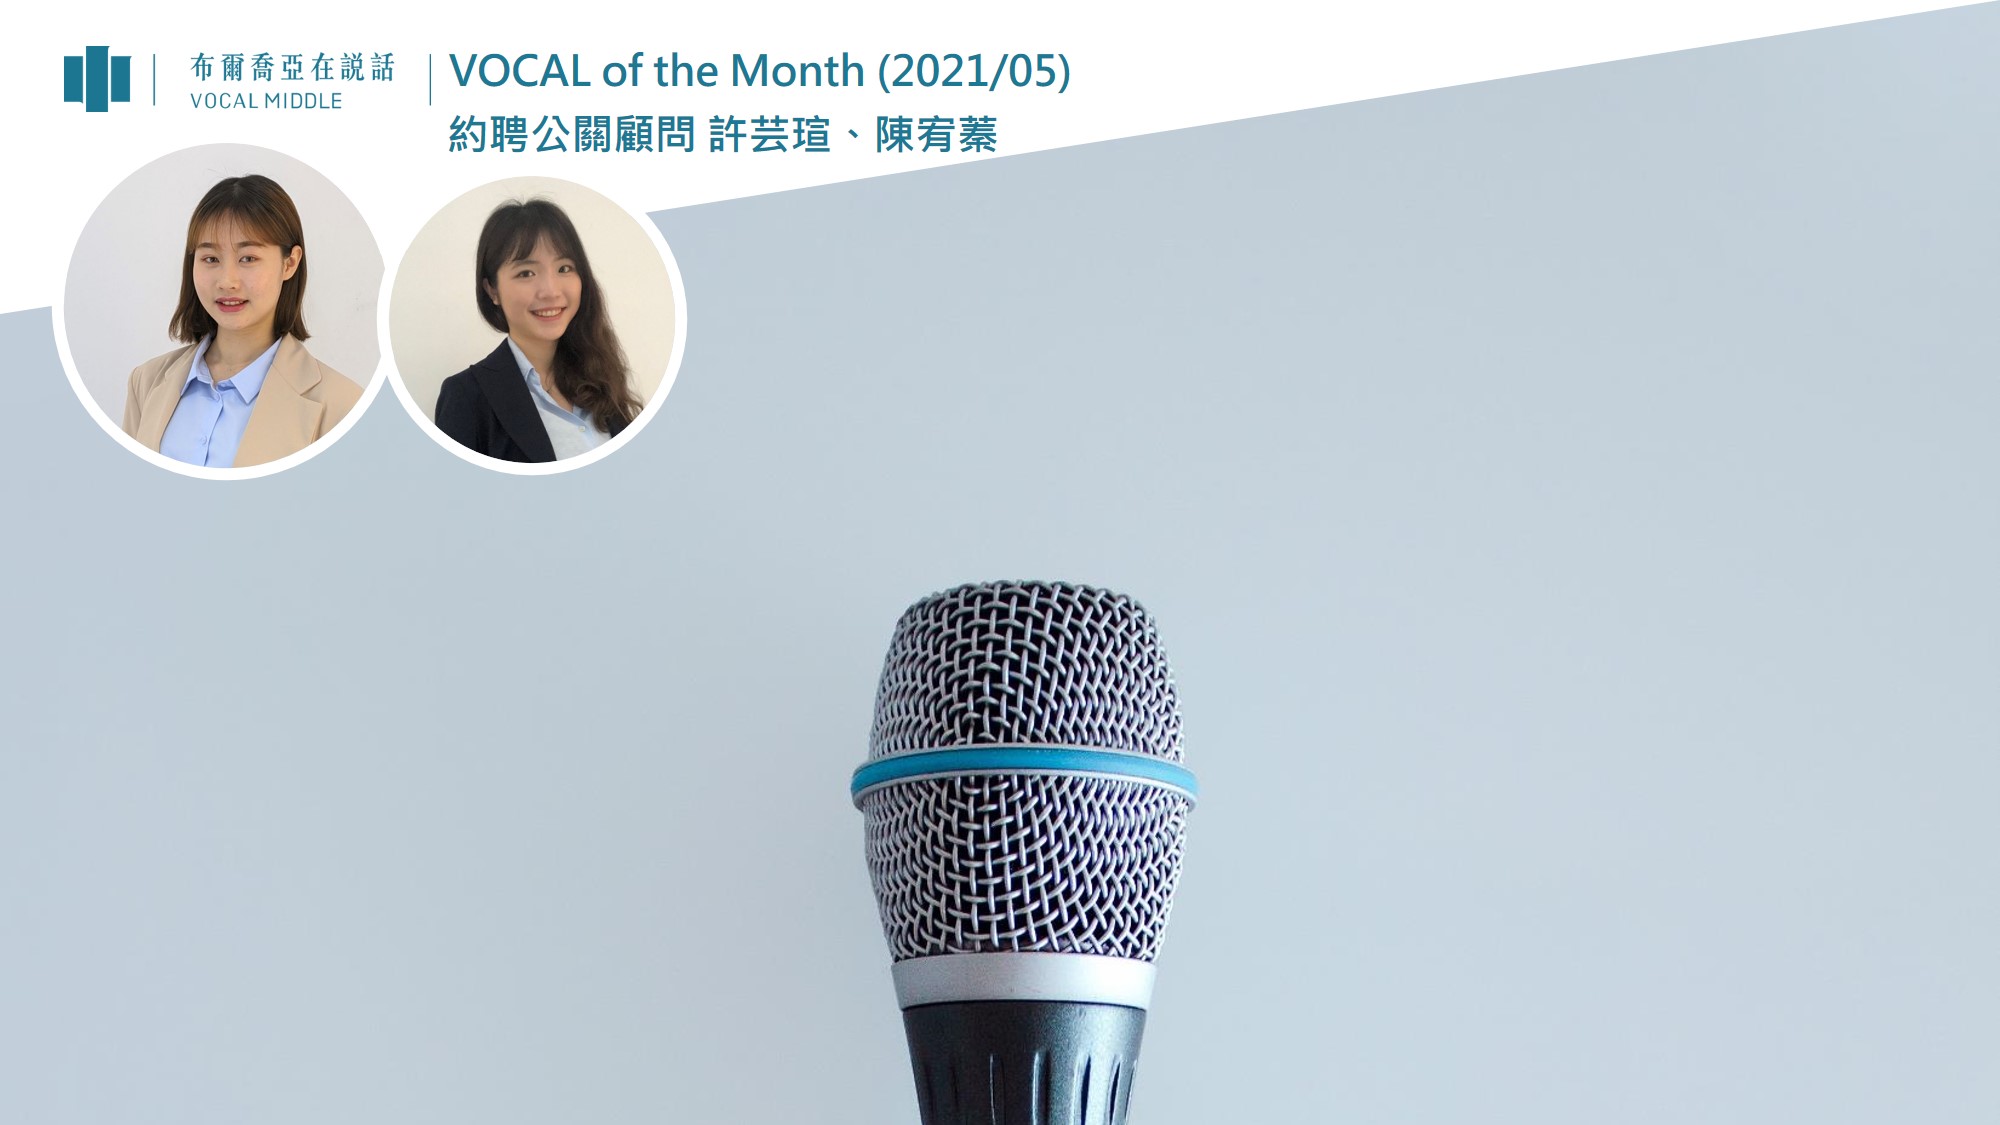 【VOCAL of the Month】中長期防疫戰開打！超前部署、情感連結是關鍵（2021/05）